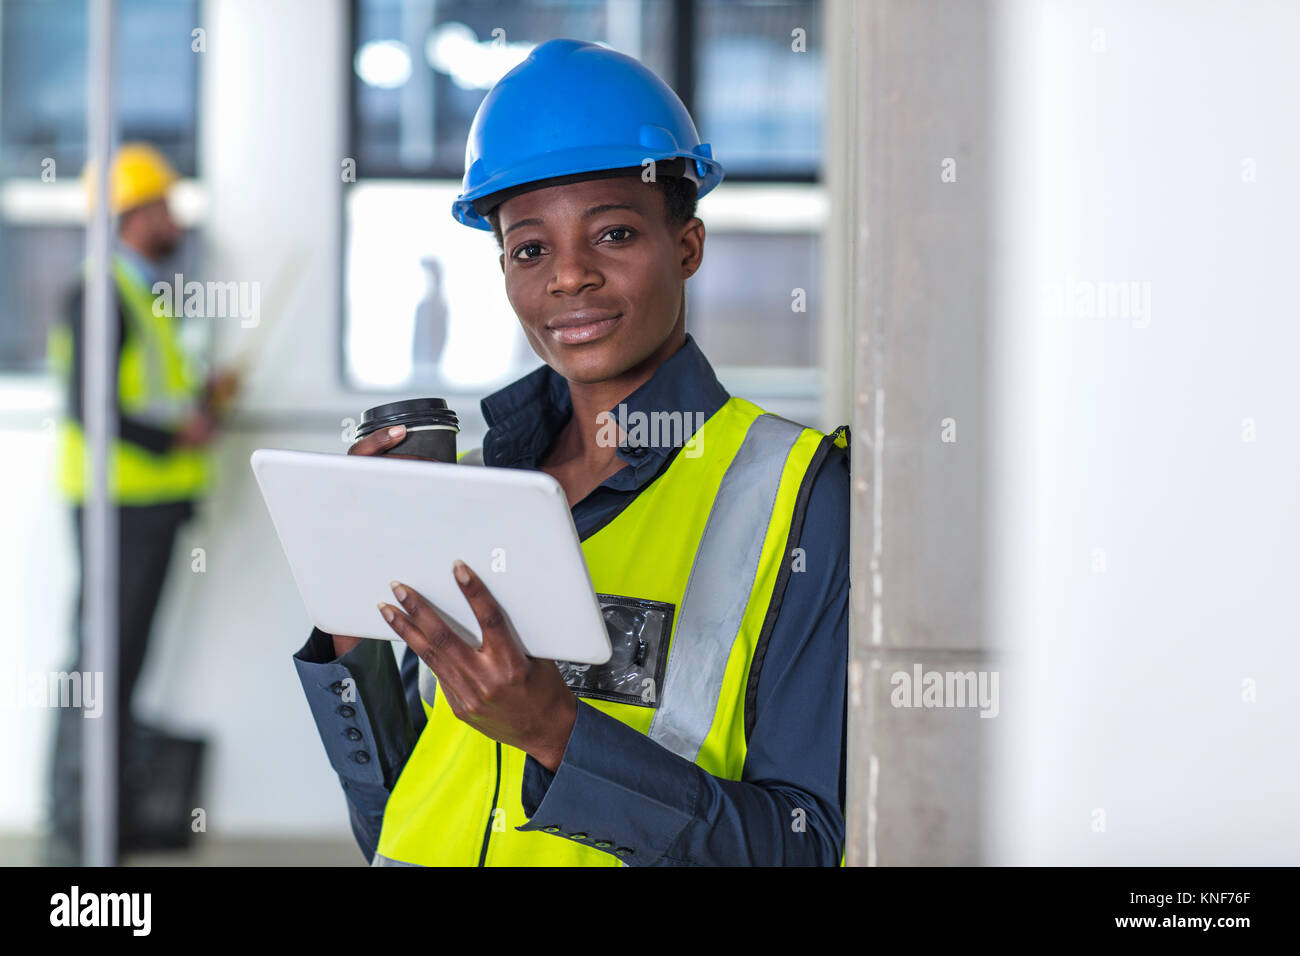 Woman with hard hat and hi viz jacket using digital tablet Stock Photo